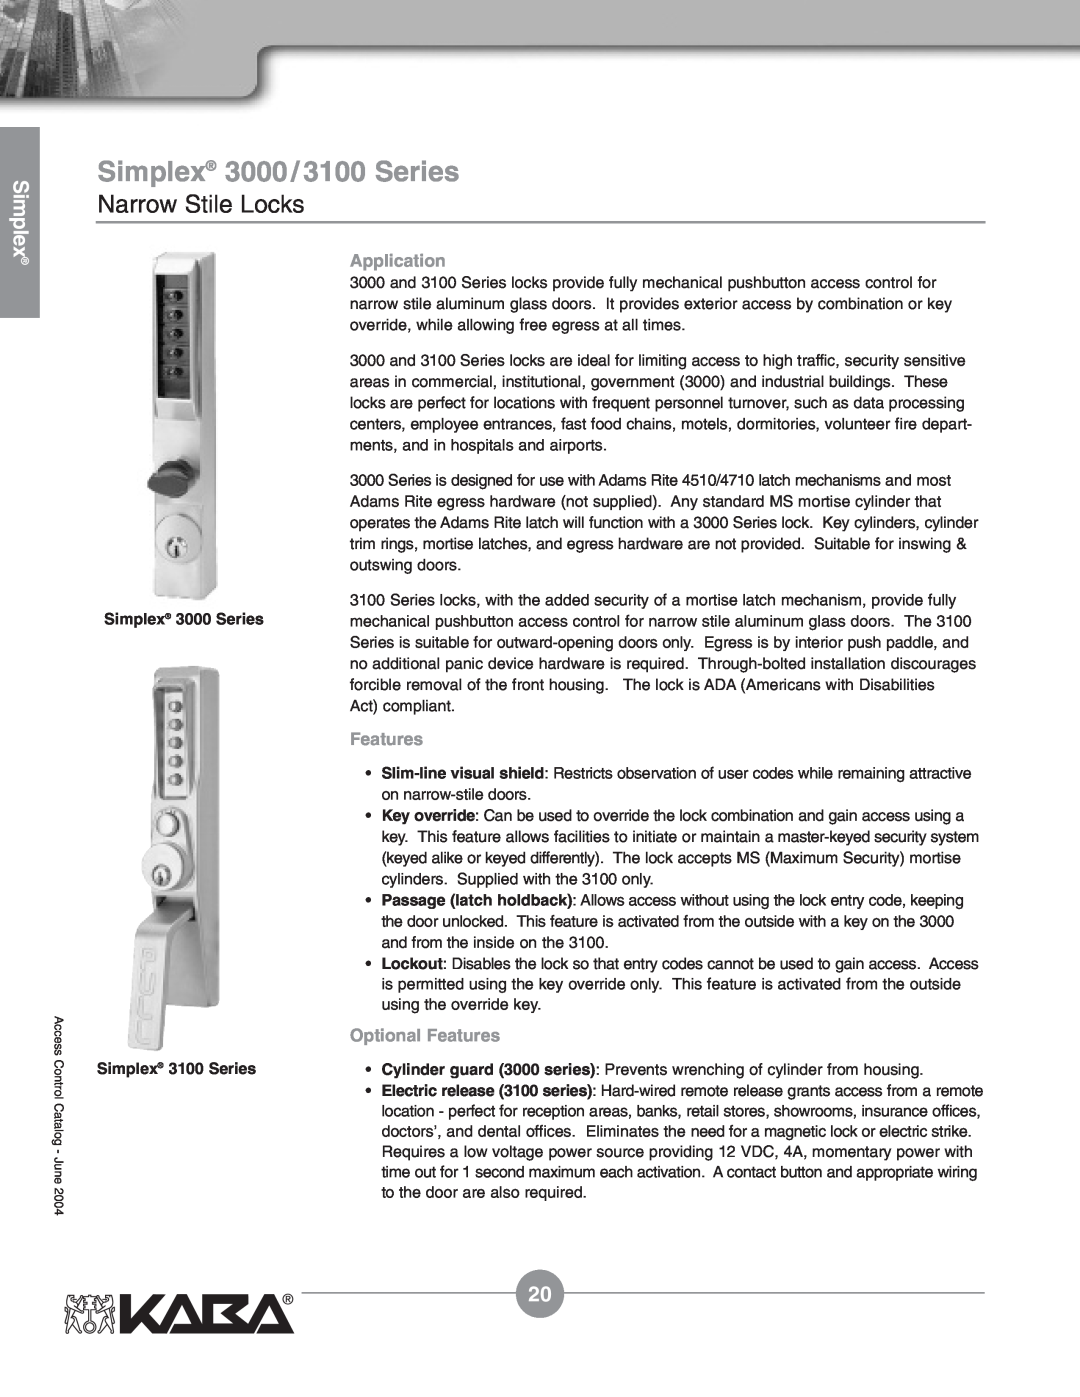 Assa Mechanical Pushbutton Locks manual Simplex 3000/3100 Series, Narrow Stile Locks, Application, Optional Features 